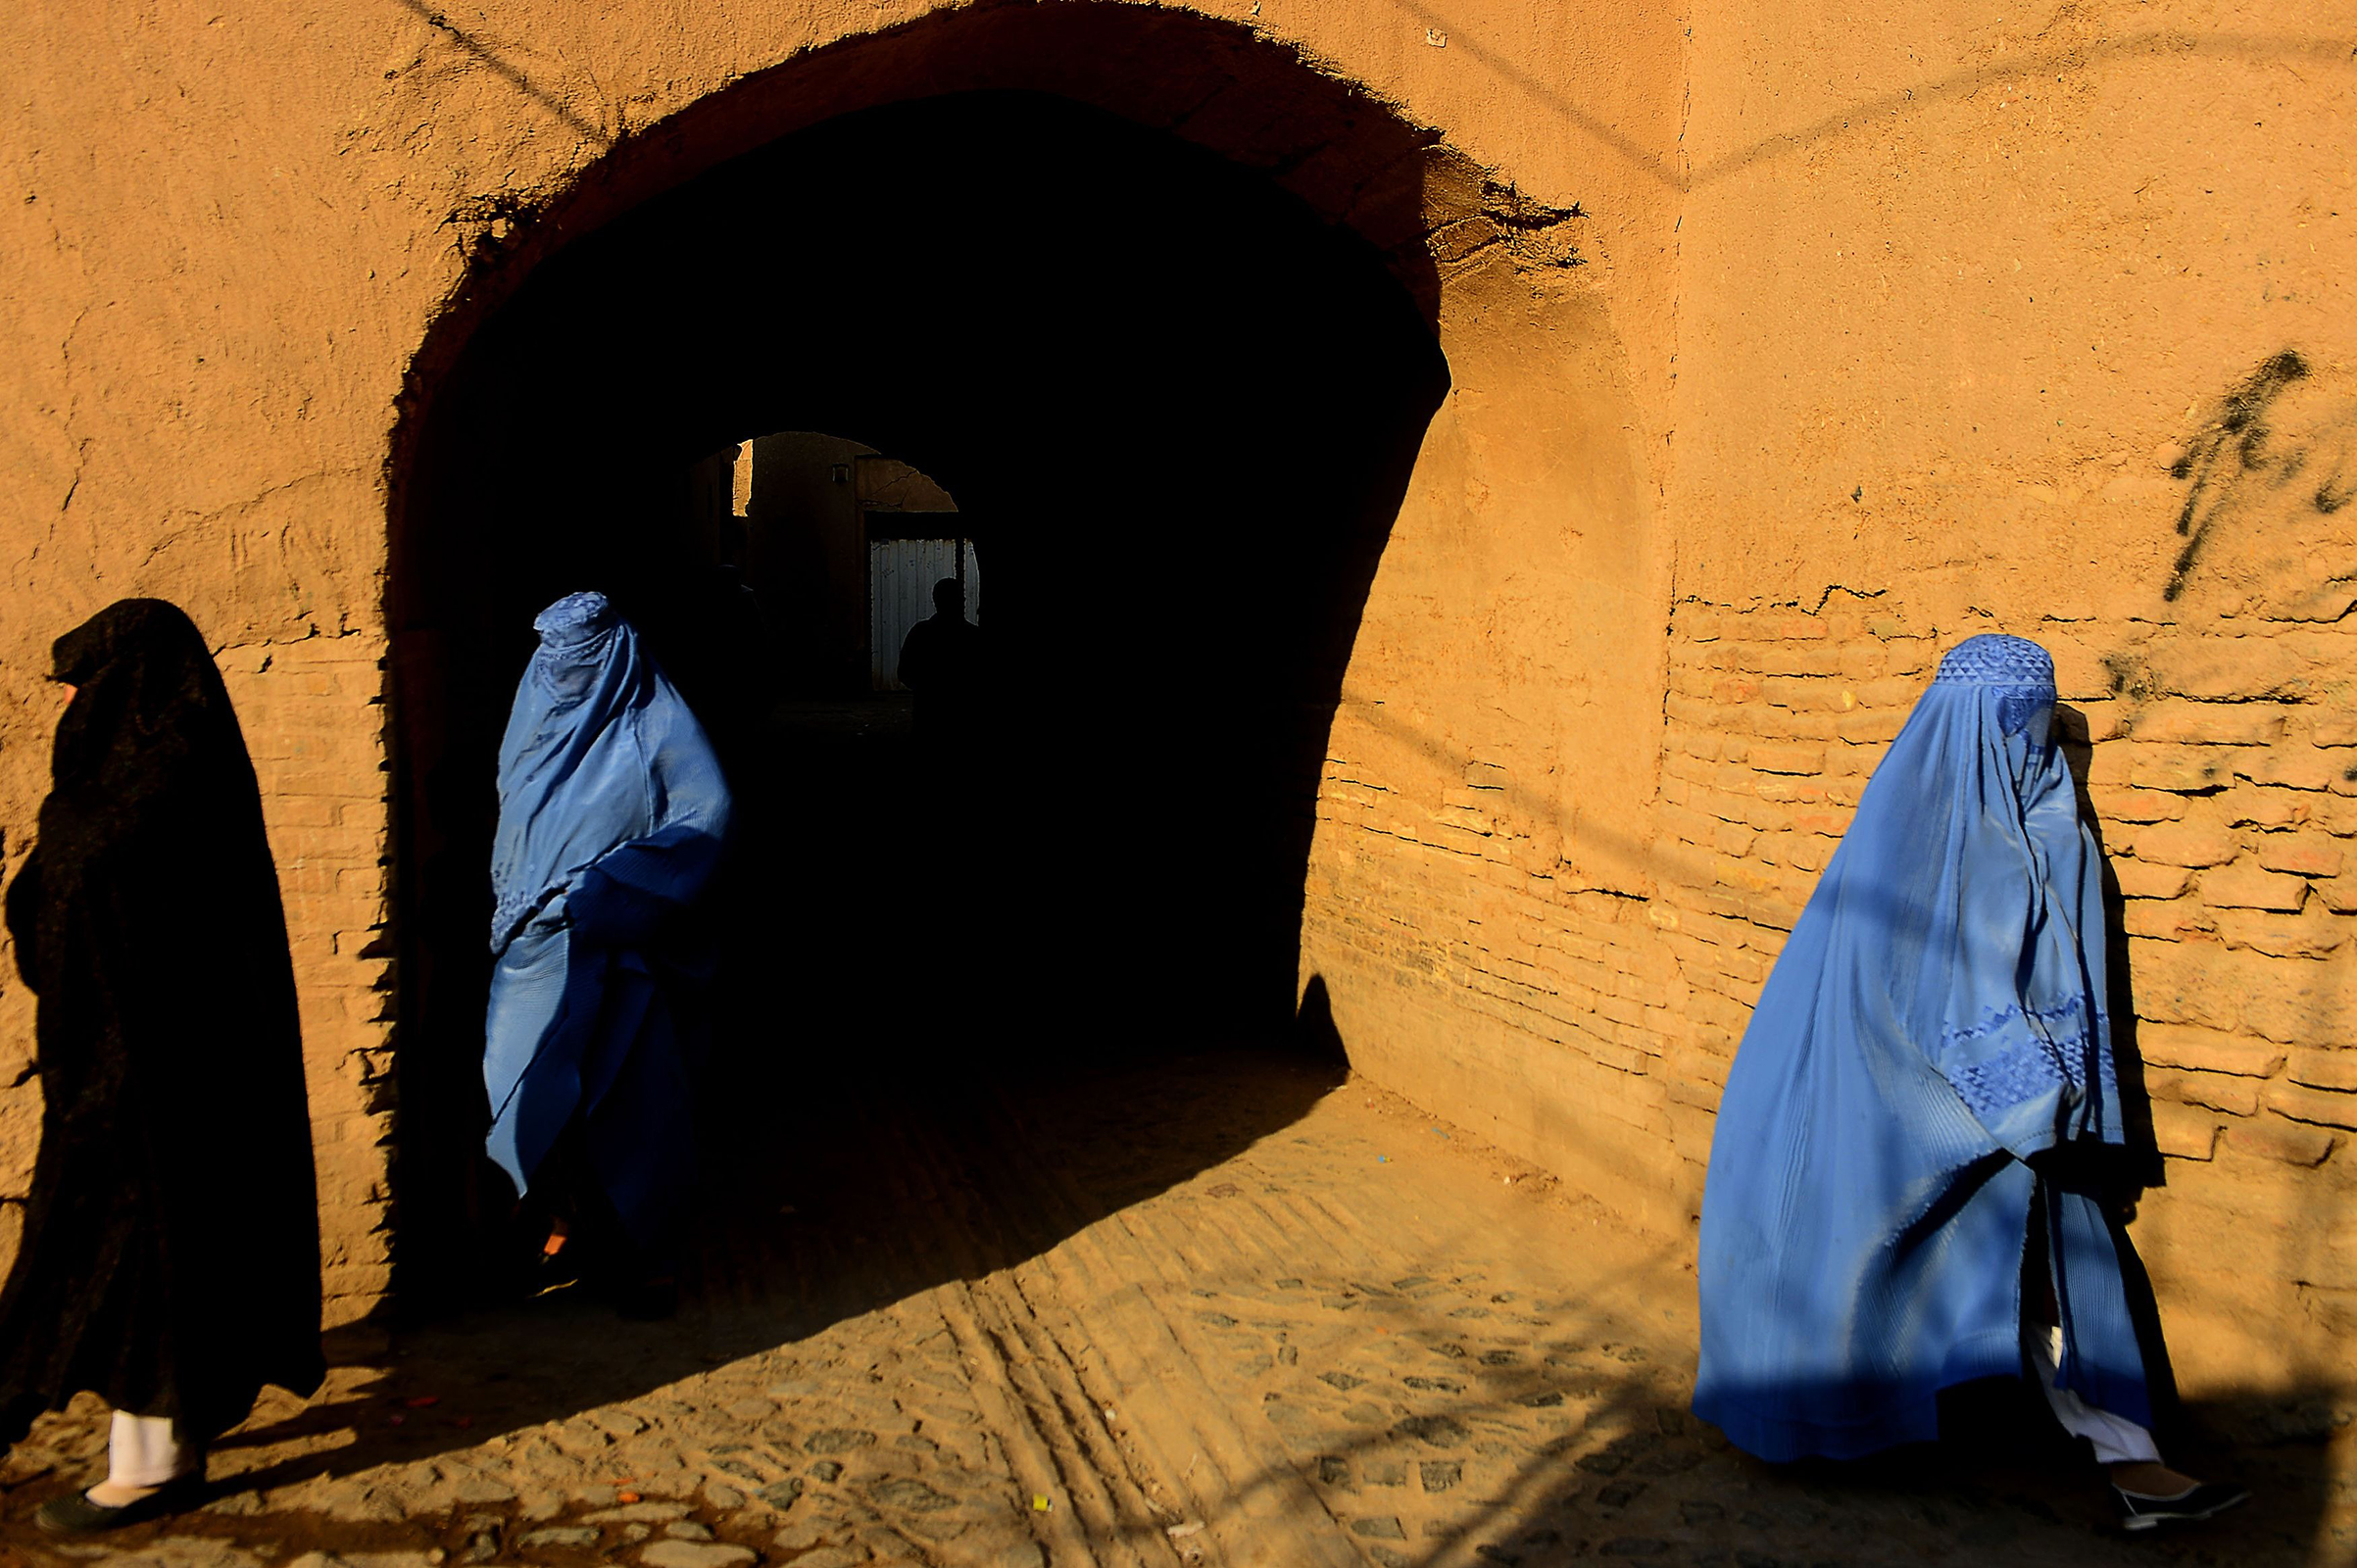 Afghanistan women